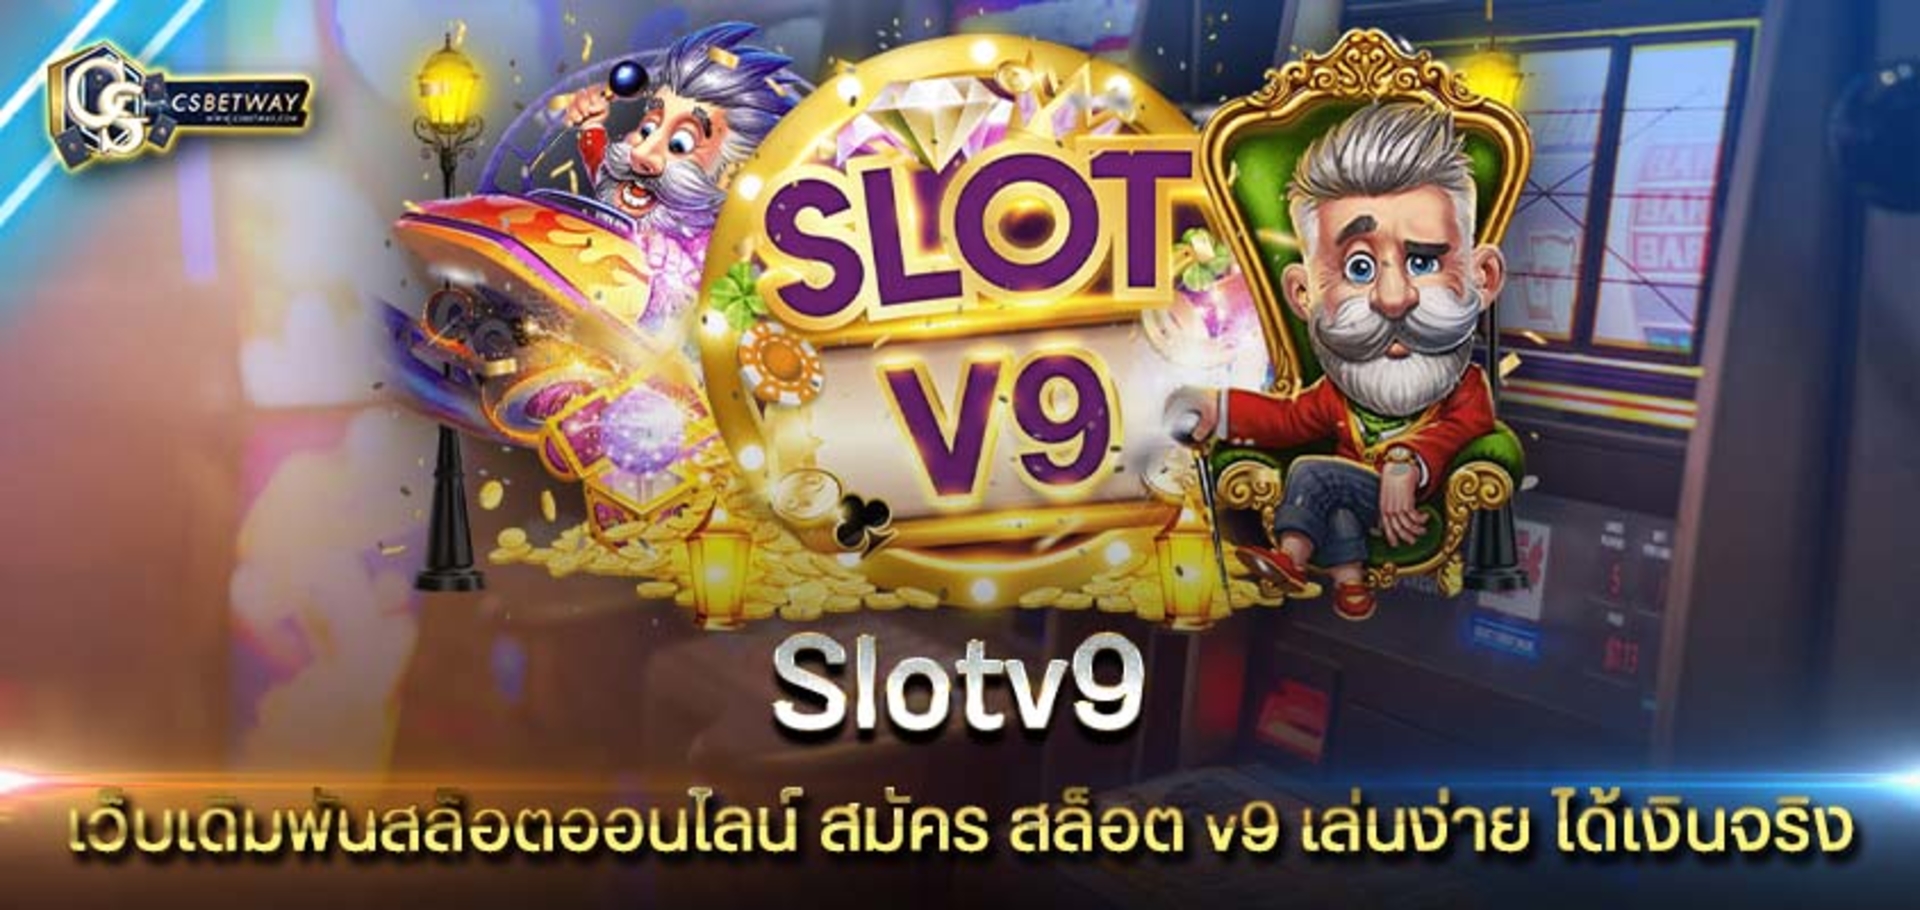 Slotv9 เว็บเดิมพันสล็อตออนไลน์ สมัคร สล็อต v9 มือใหม่เล่นง่าย ได้เงินจริง